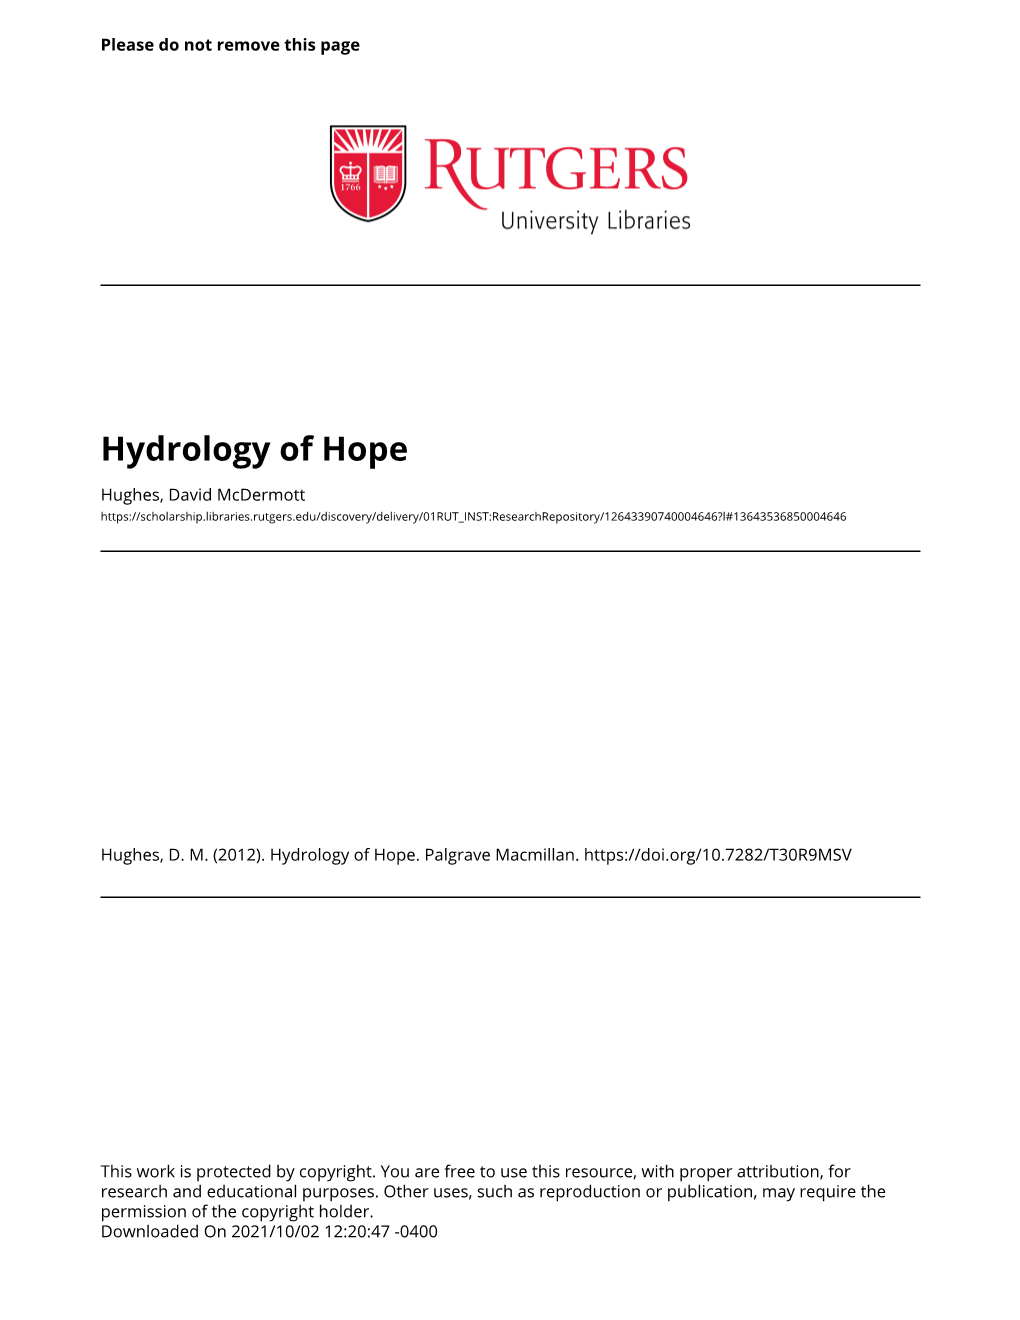 Hydrology of Hope